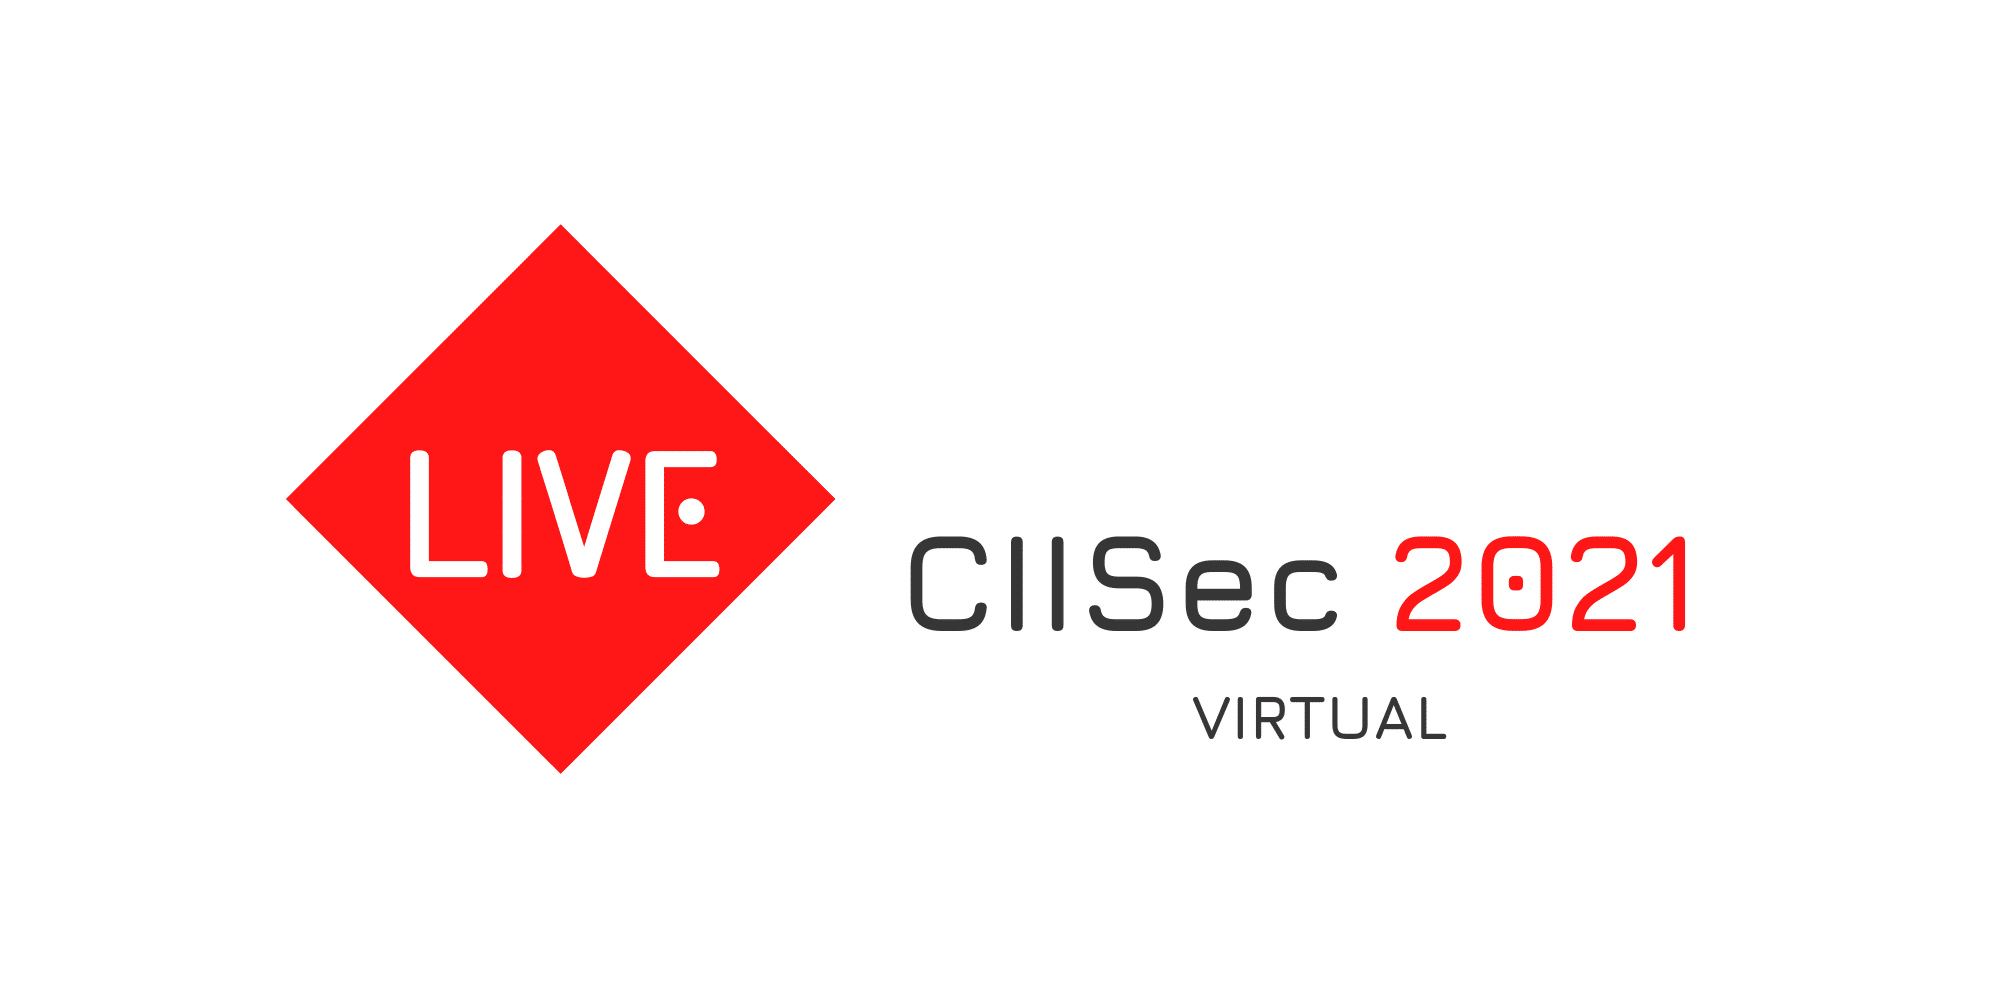 An image of the CIISec 2021 logo.